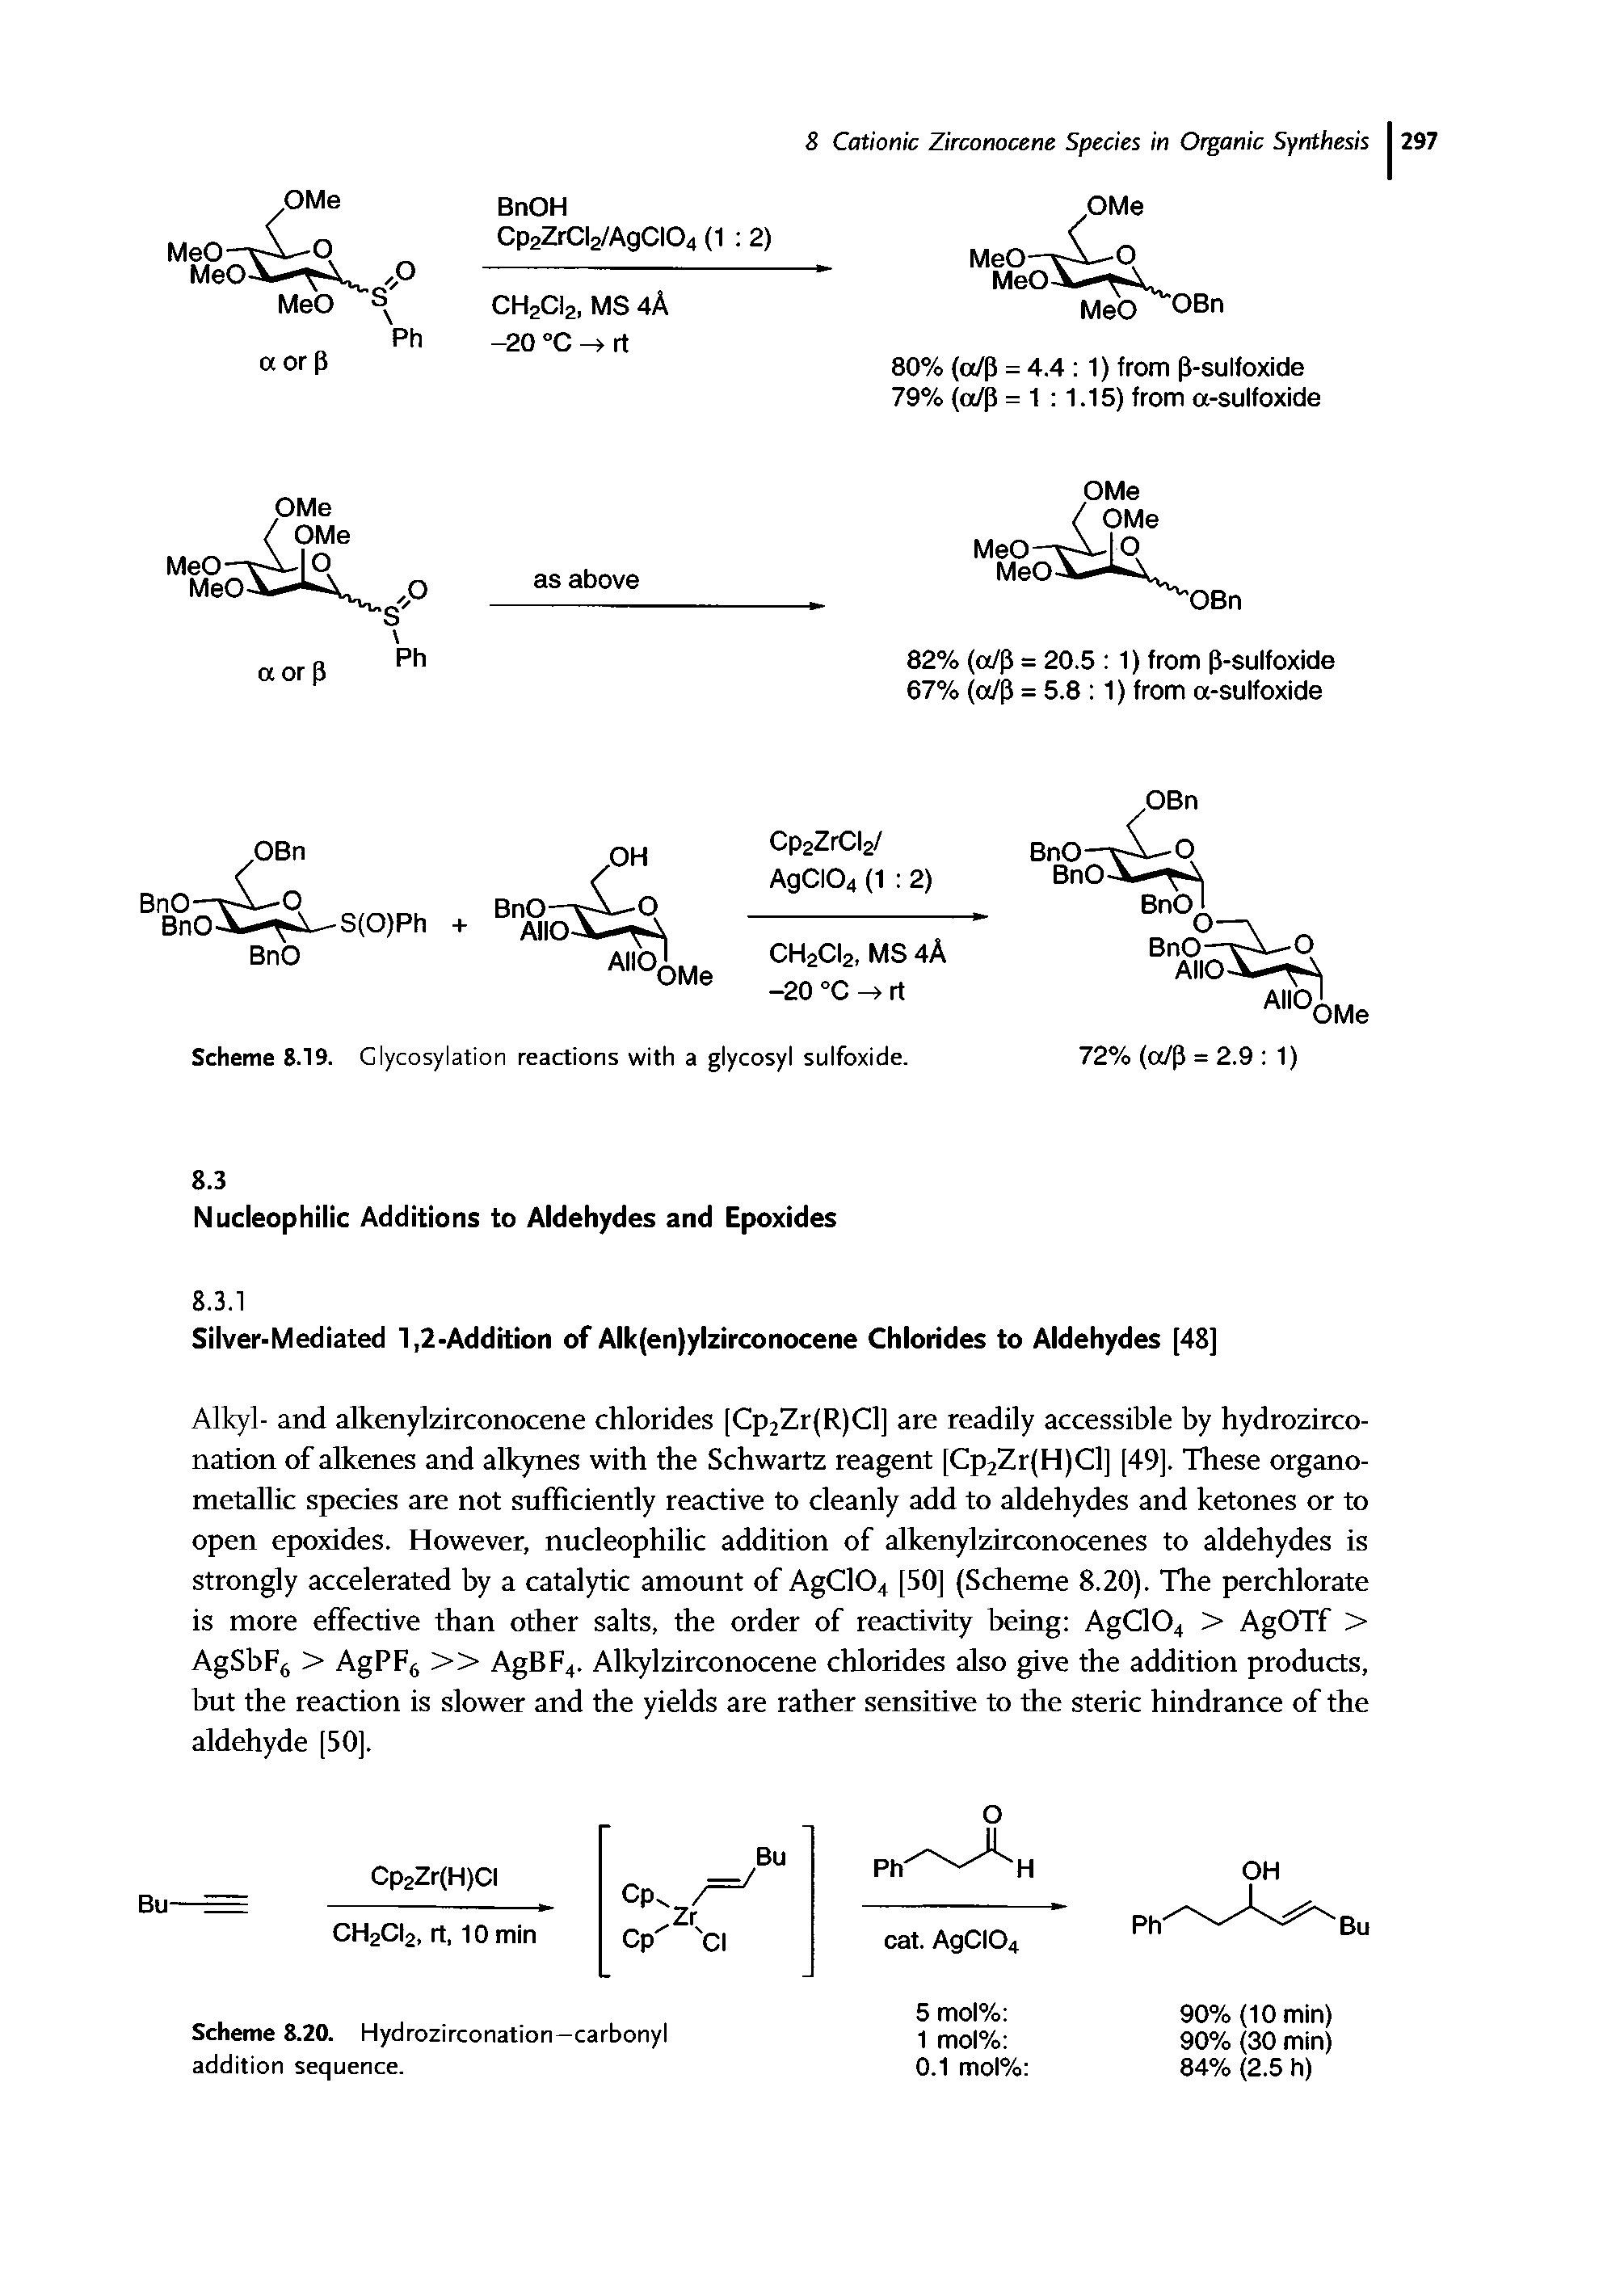 Scheme 8.19. Glycosylation reactions with a glycosyl sulfoxide.